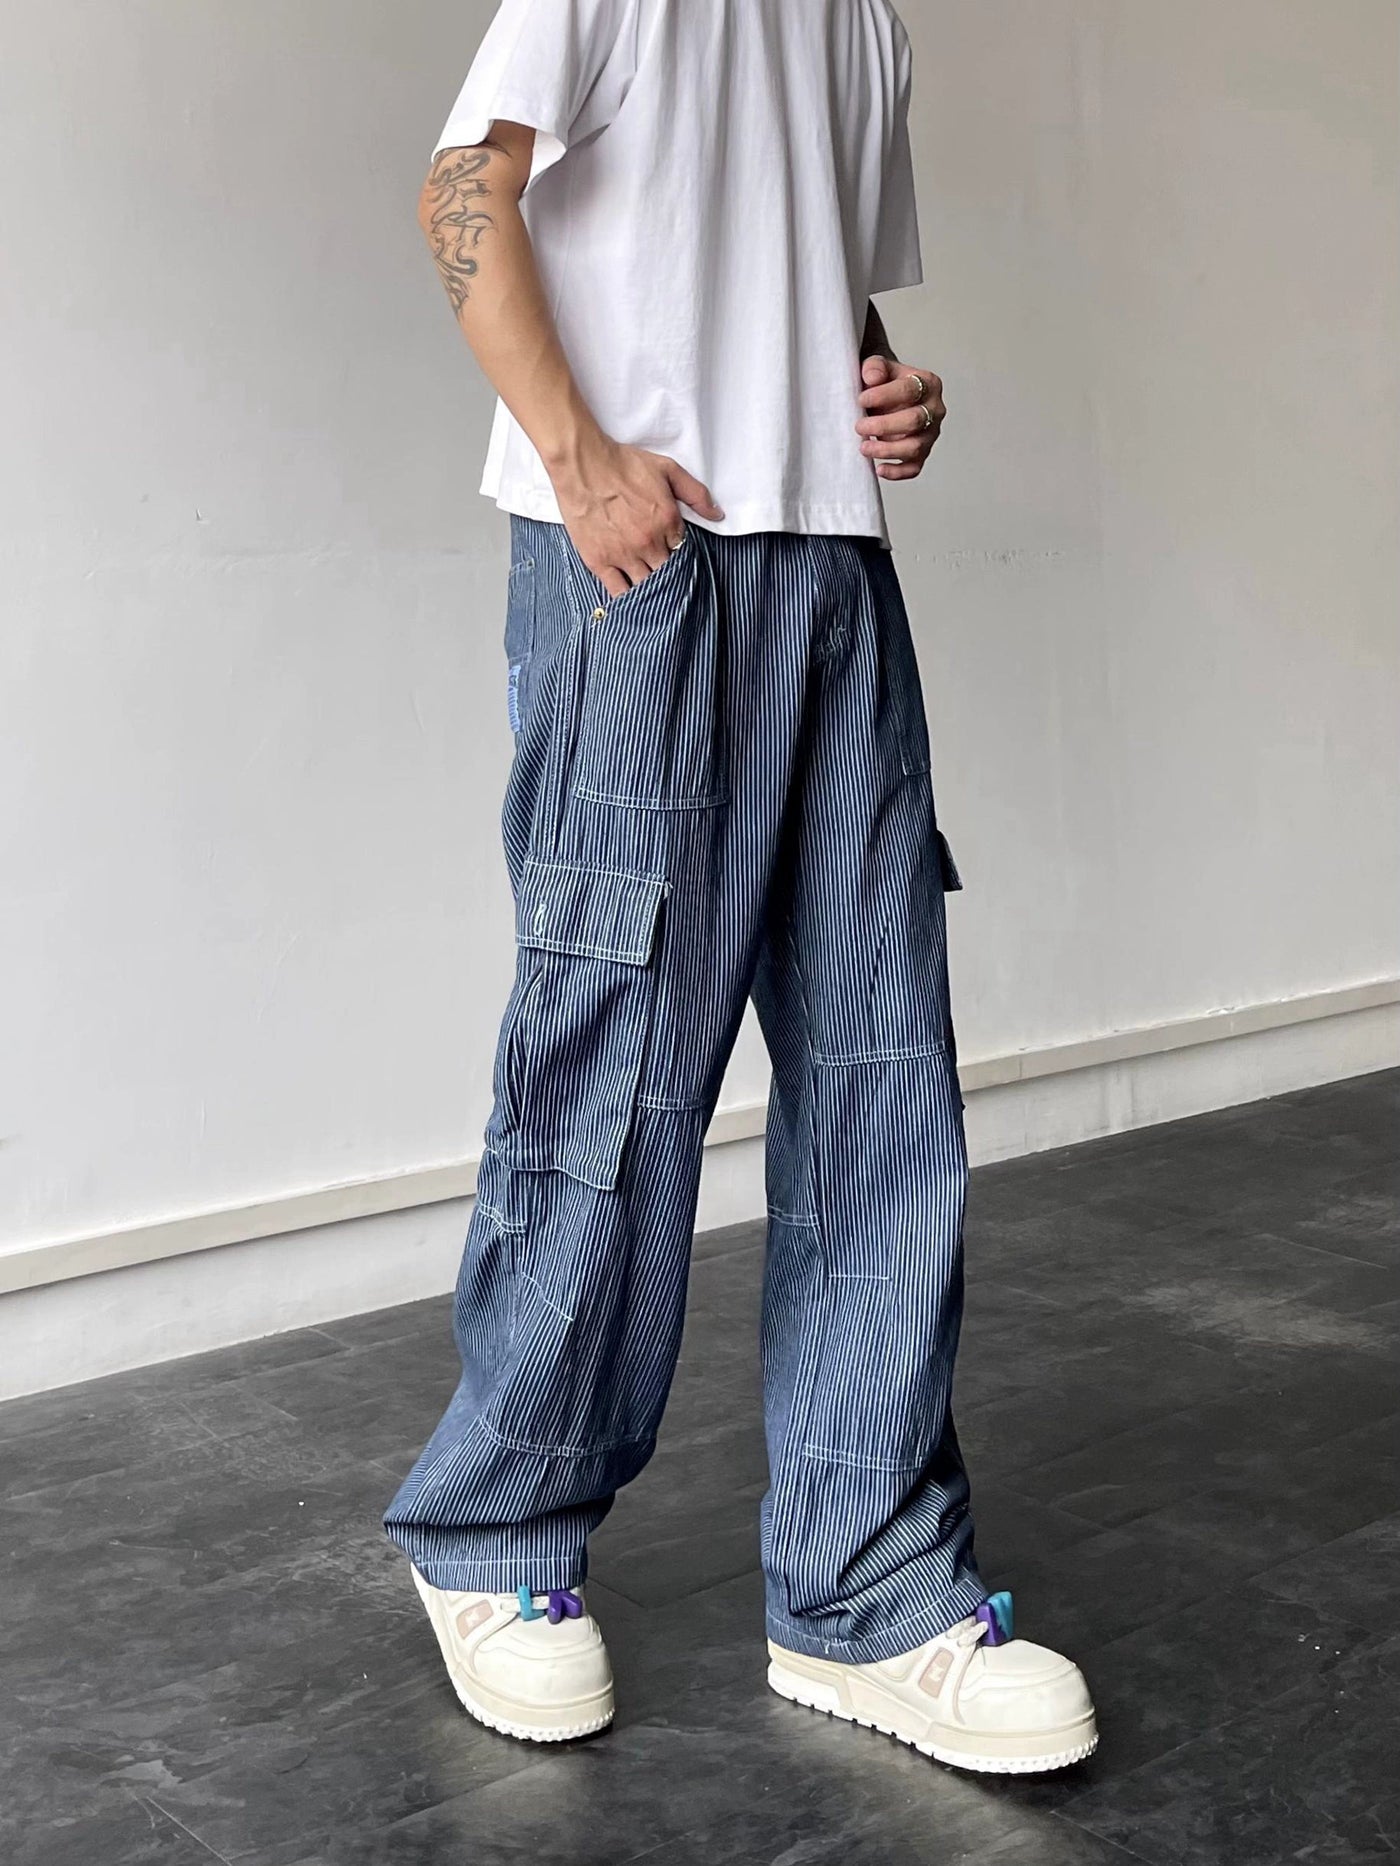 Vertical Stripes Cargo Pants Korean Street Fashion Pants By Blacklists Shop Online at OH Vault